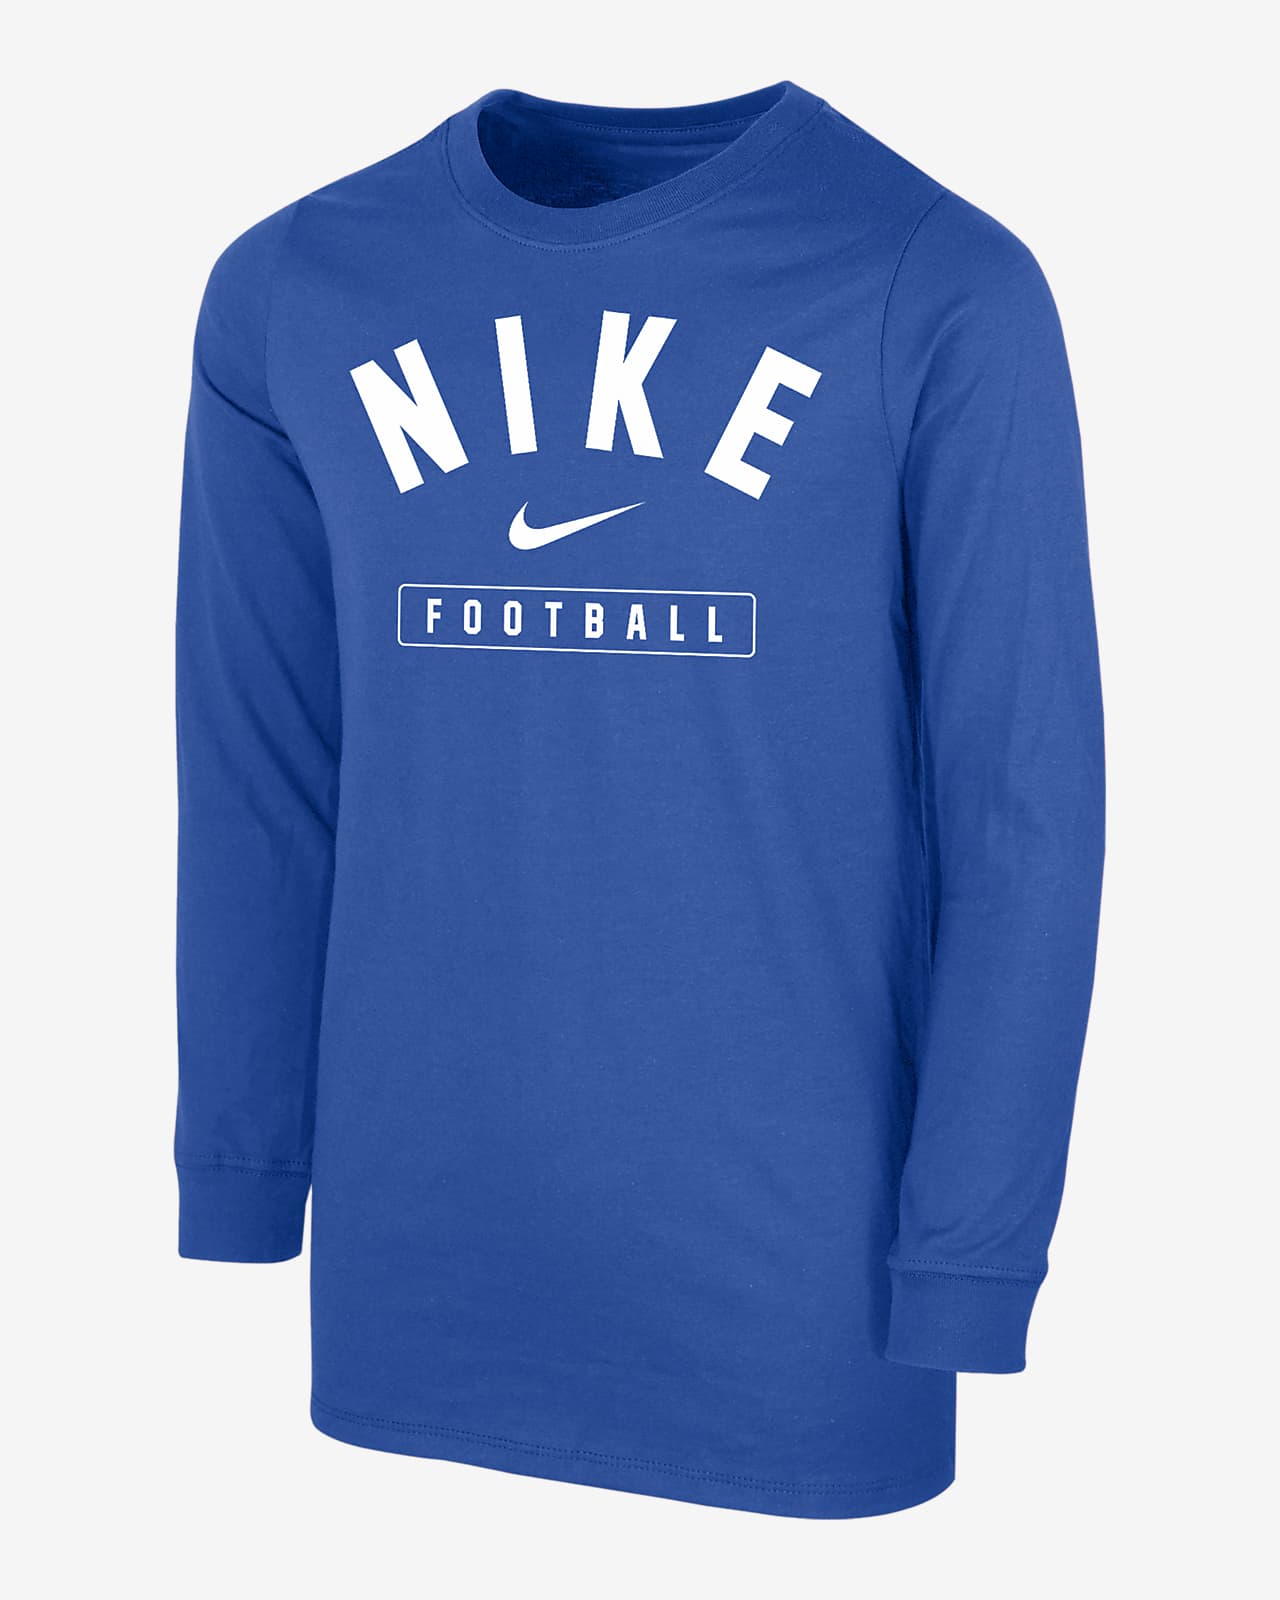 Nike Football Big Kids' (Boys') Long-Sleeve T-Shirt